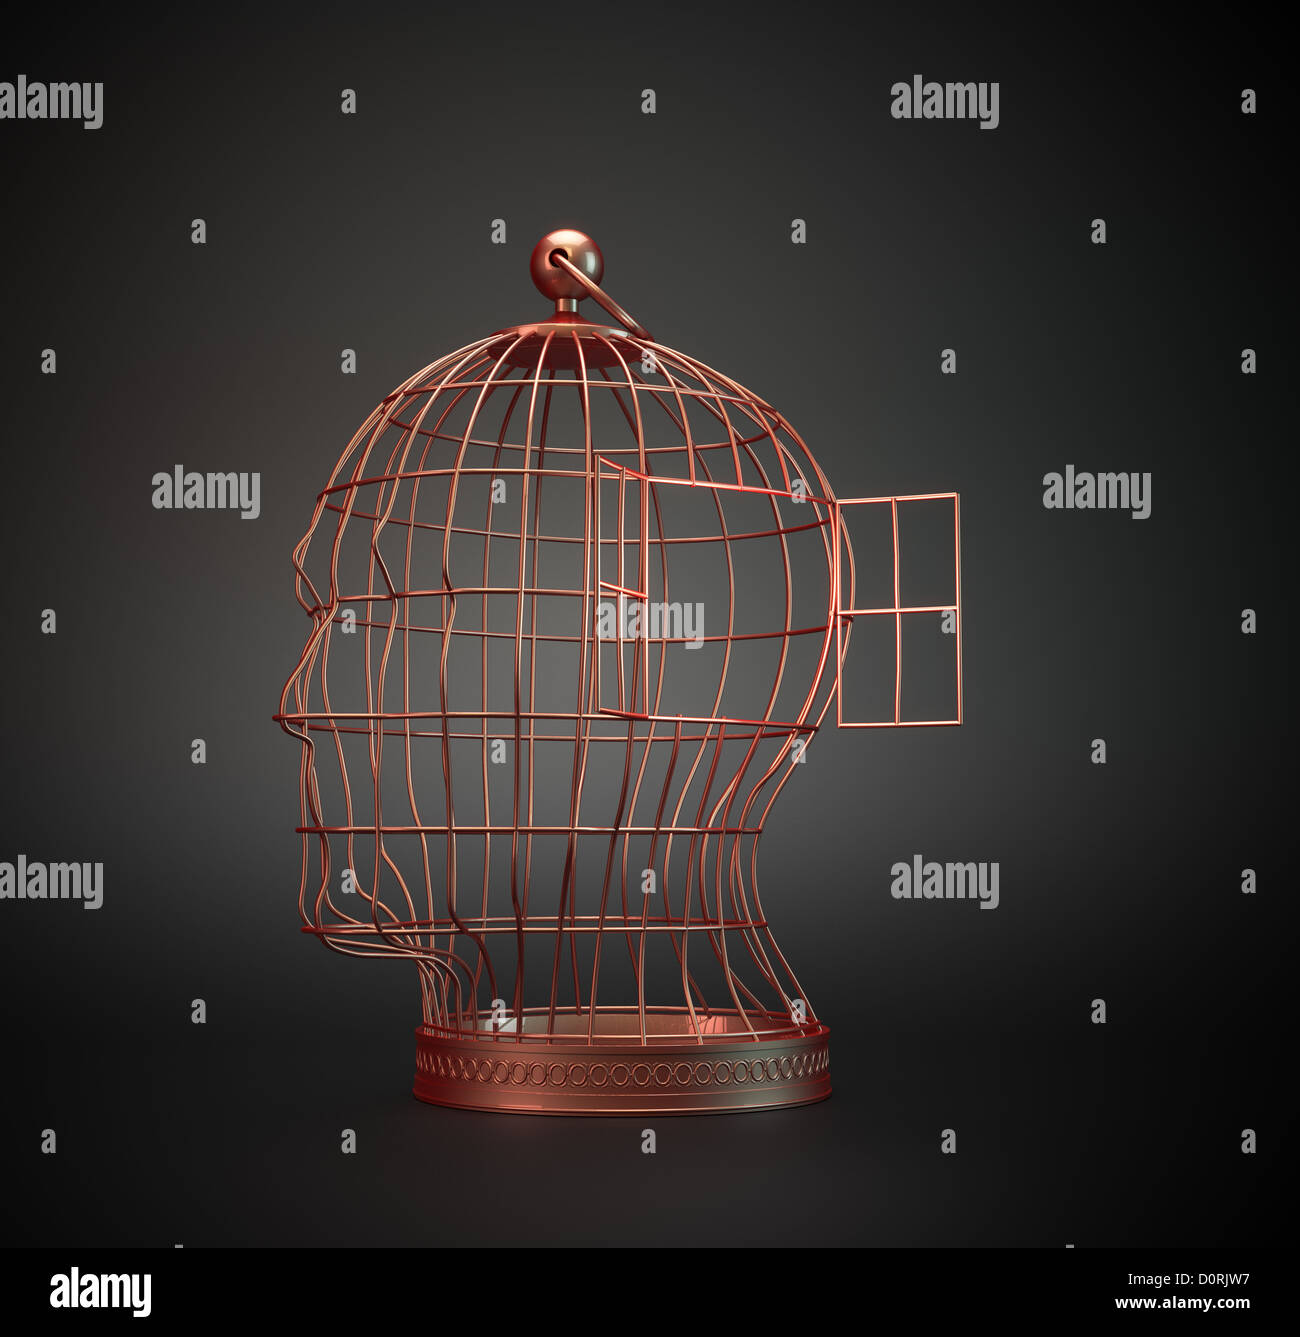 Human head bird cage Stock Photo - Alamy